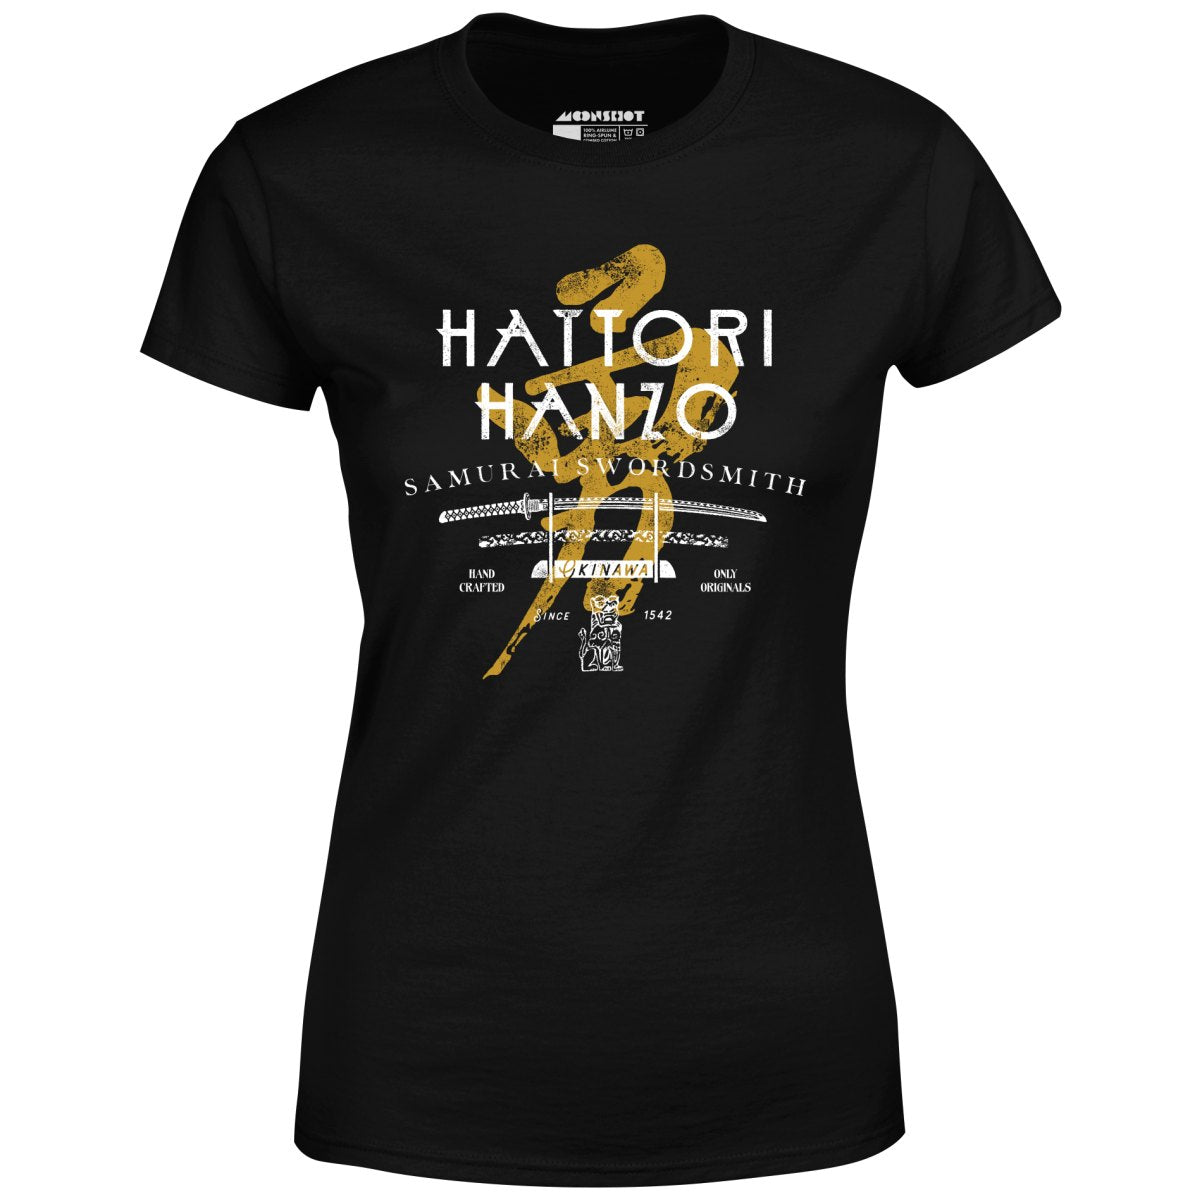 Hattori Hanzo Samurai Swordsmith - Women's T-Shirt